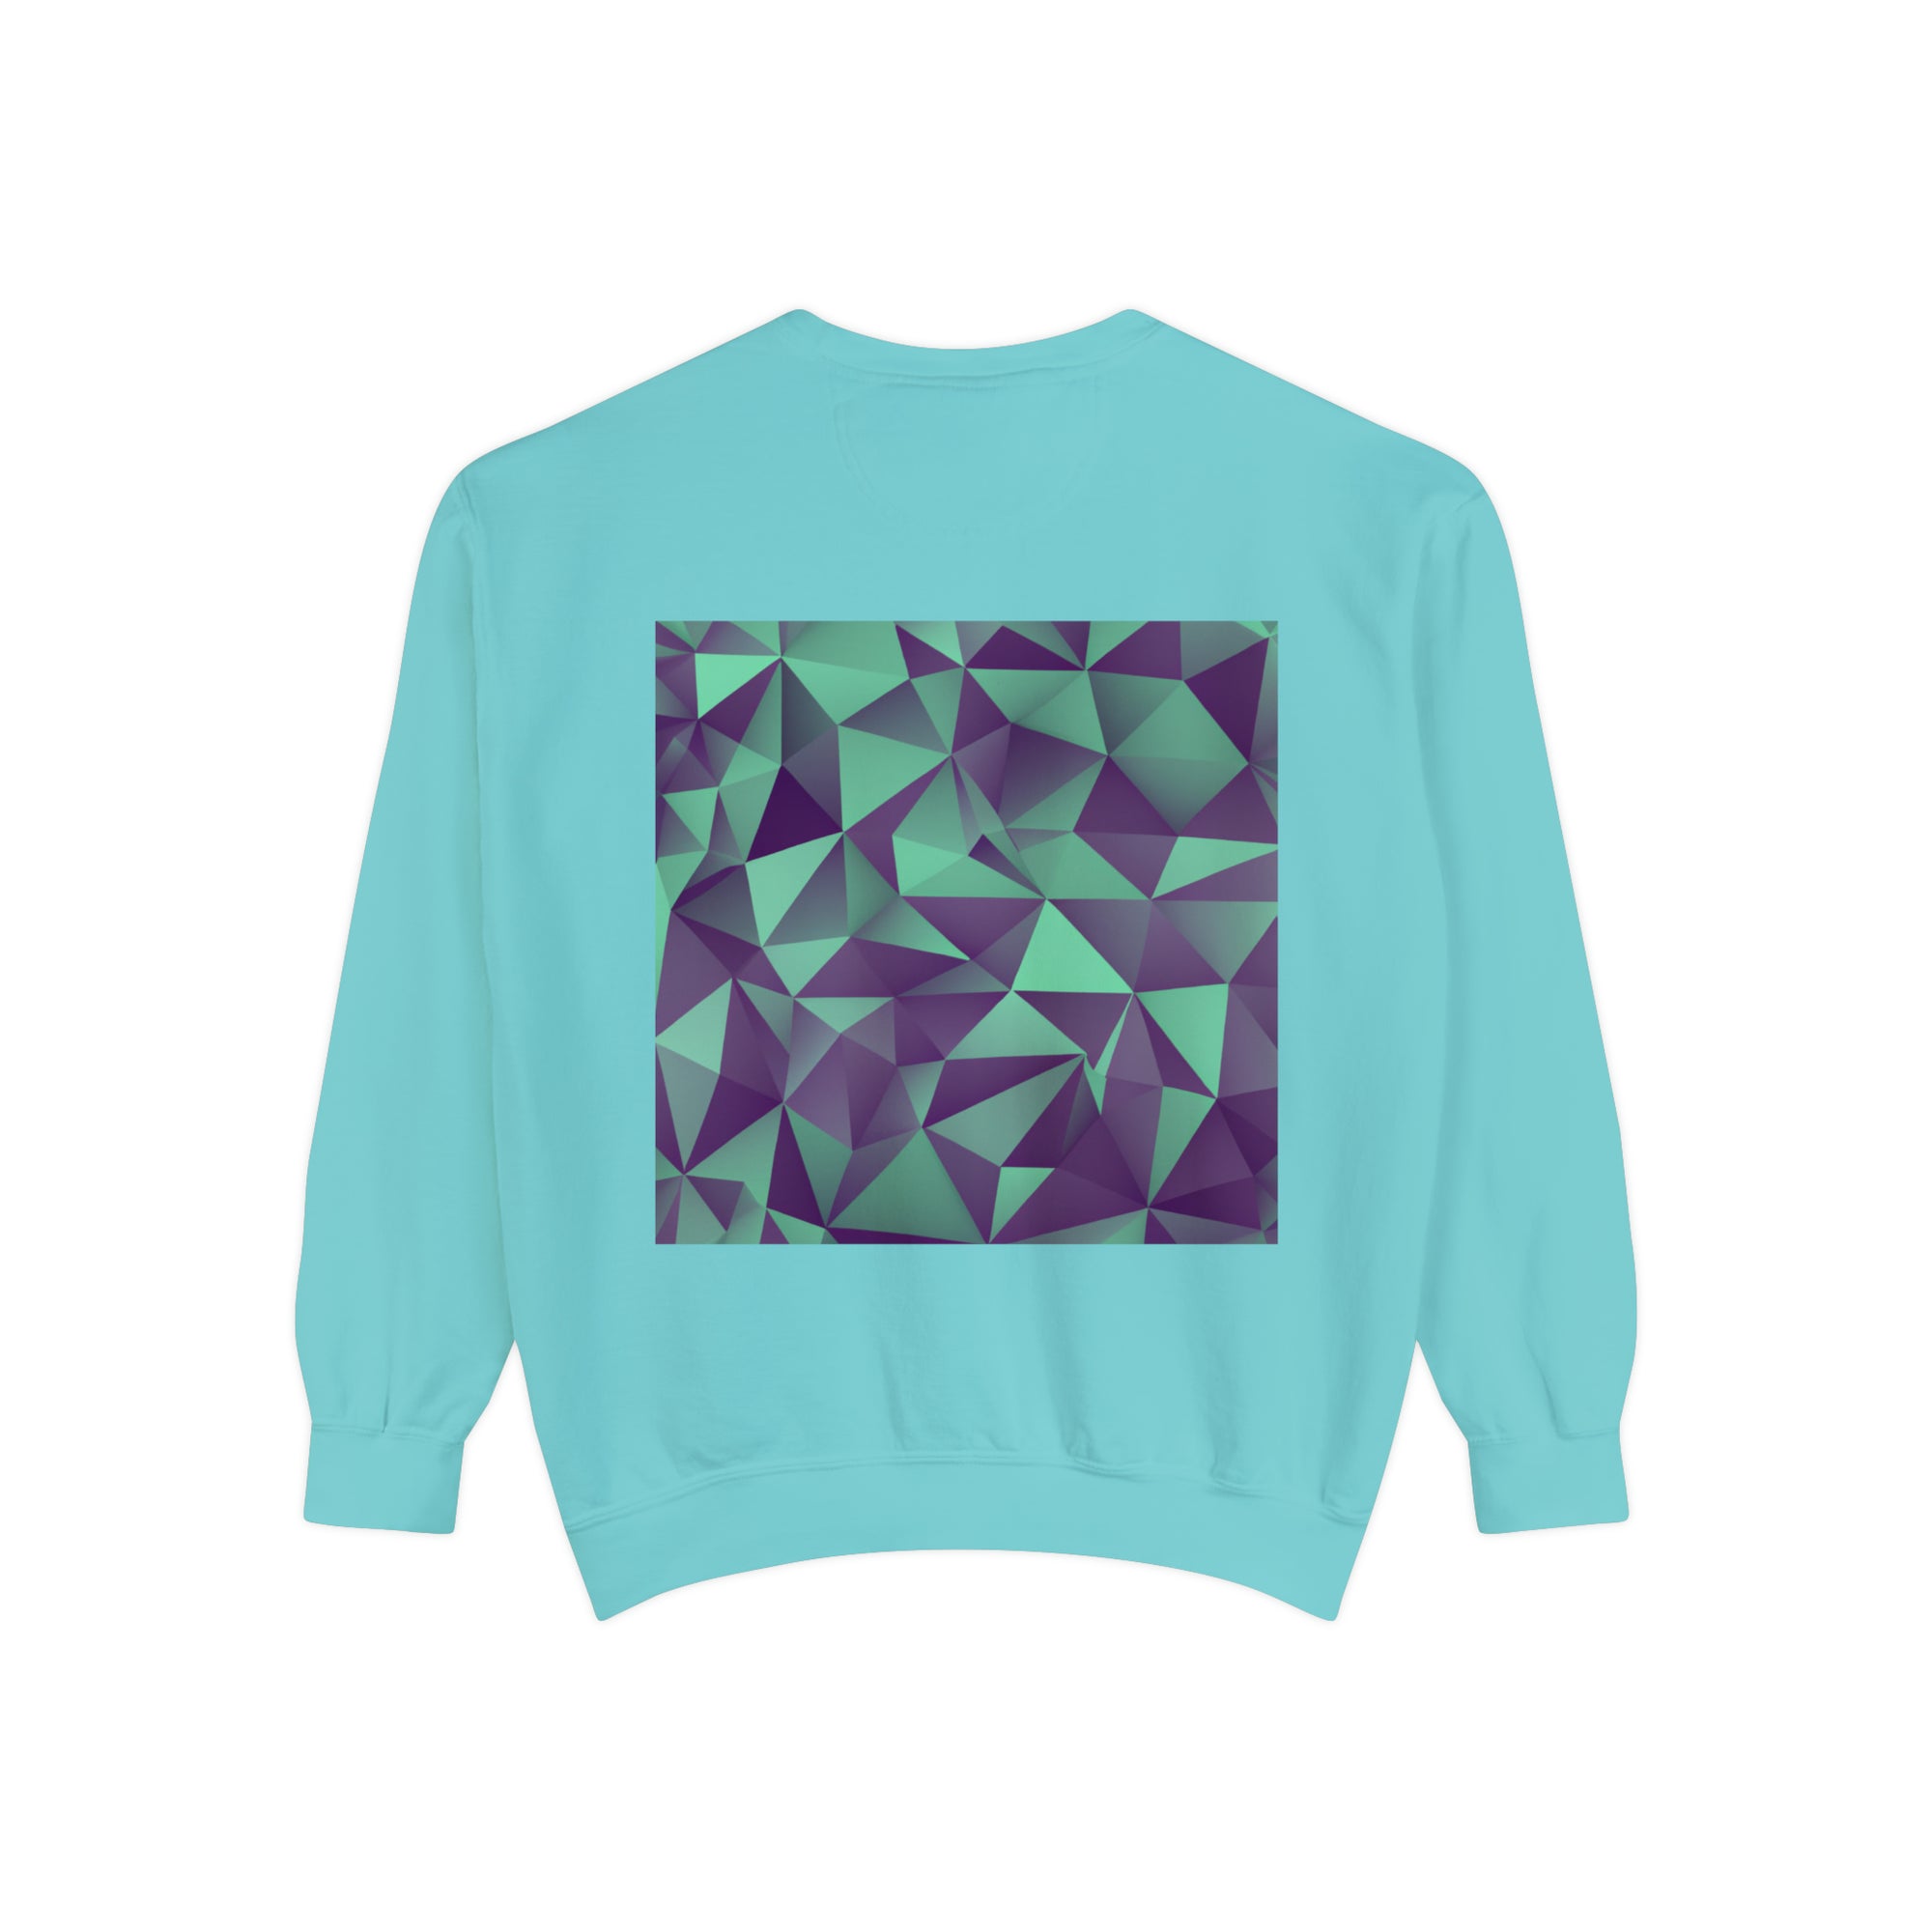 "Live Well" - Sweatshirt Garment-Dyed